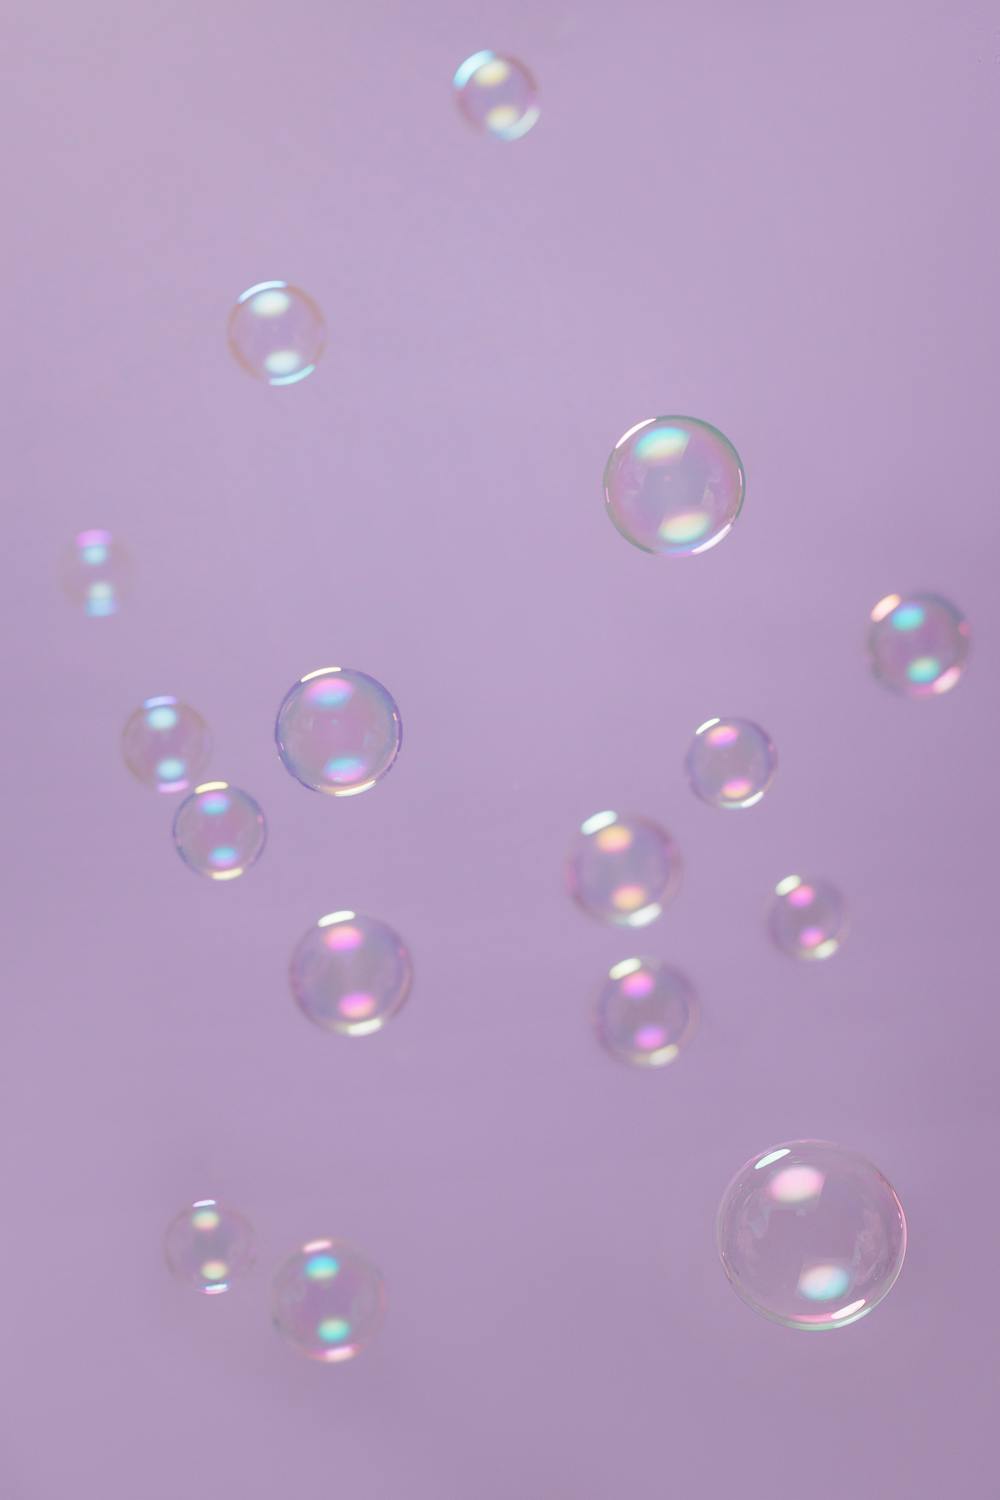 Bubbles on Purple Background · Free Stock Photo